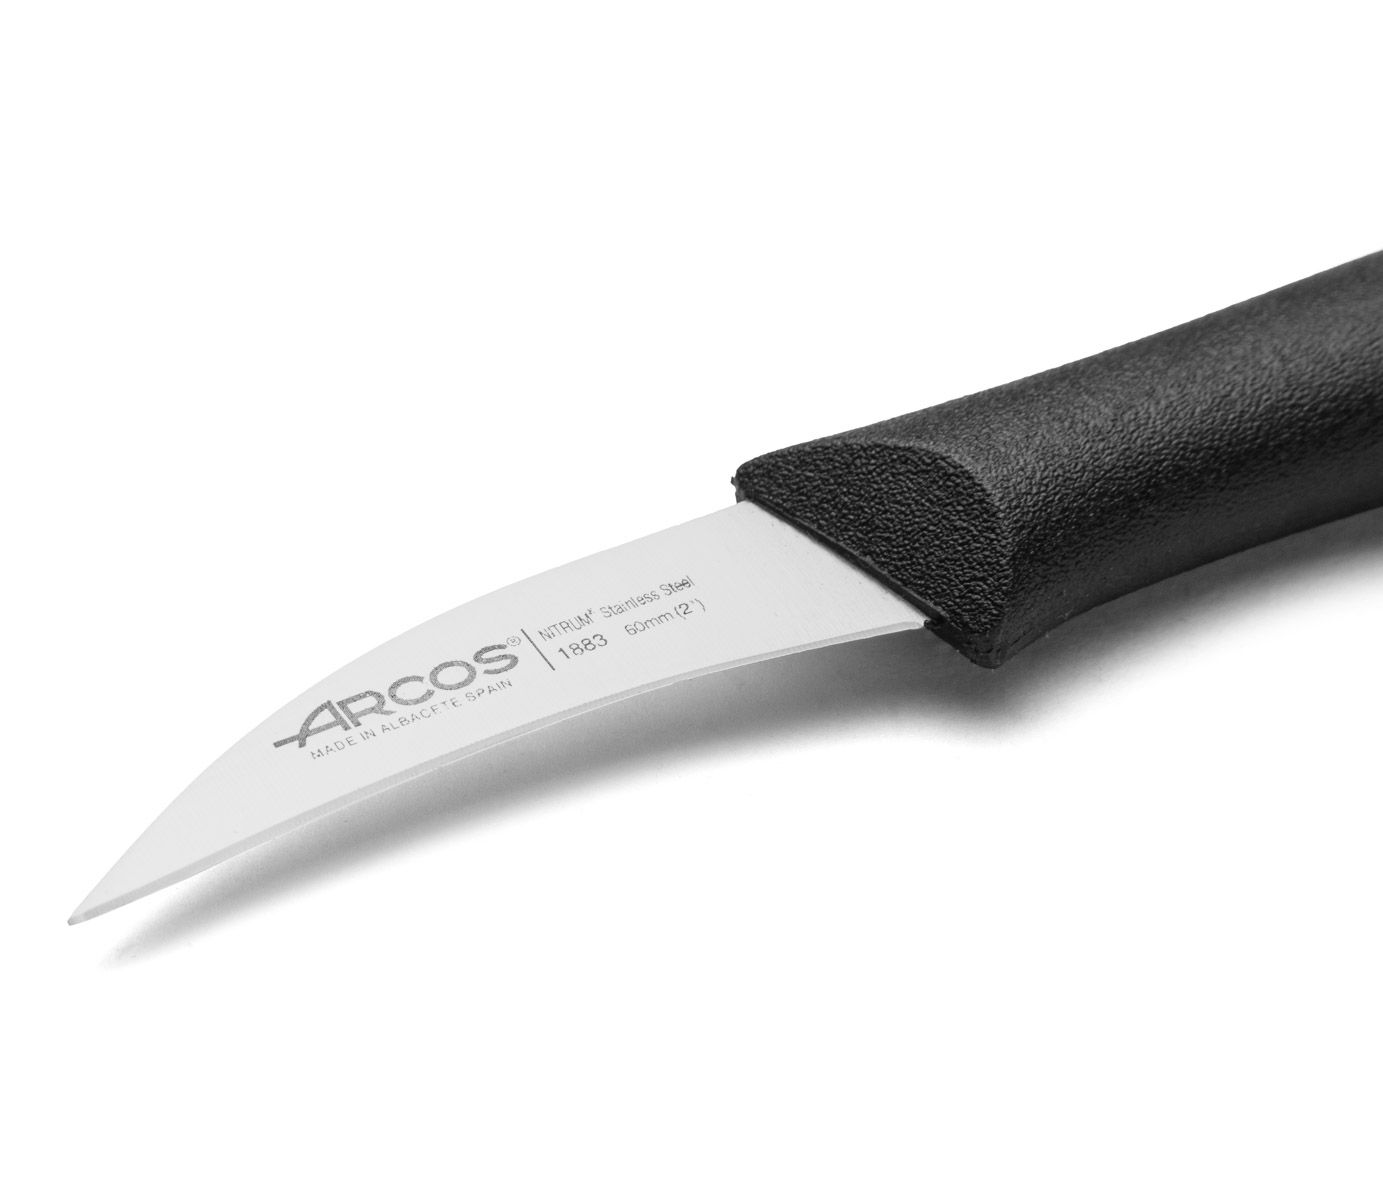 Arcos Nova Series 2 Inch Paring Knife - 188300